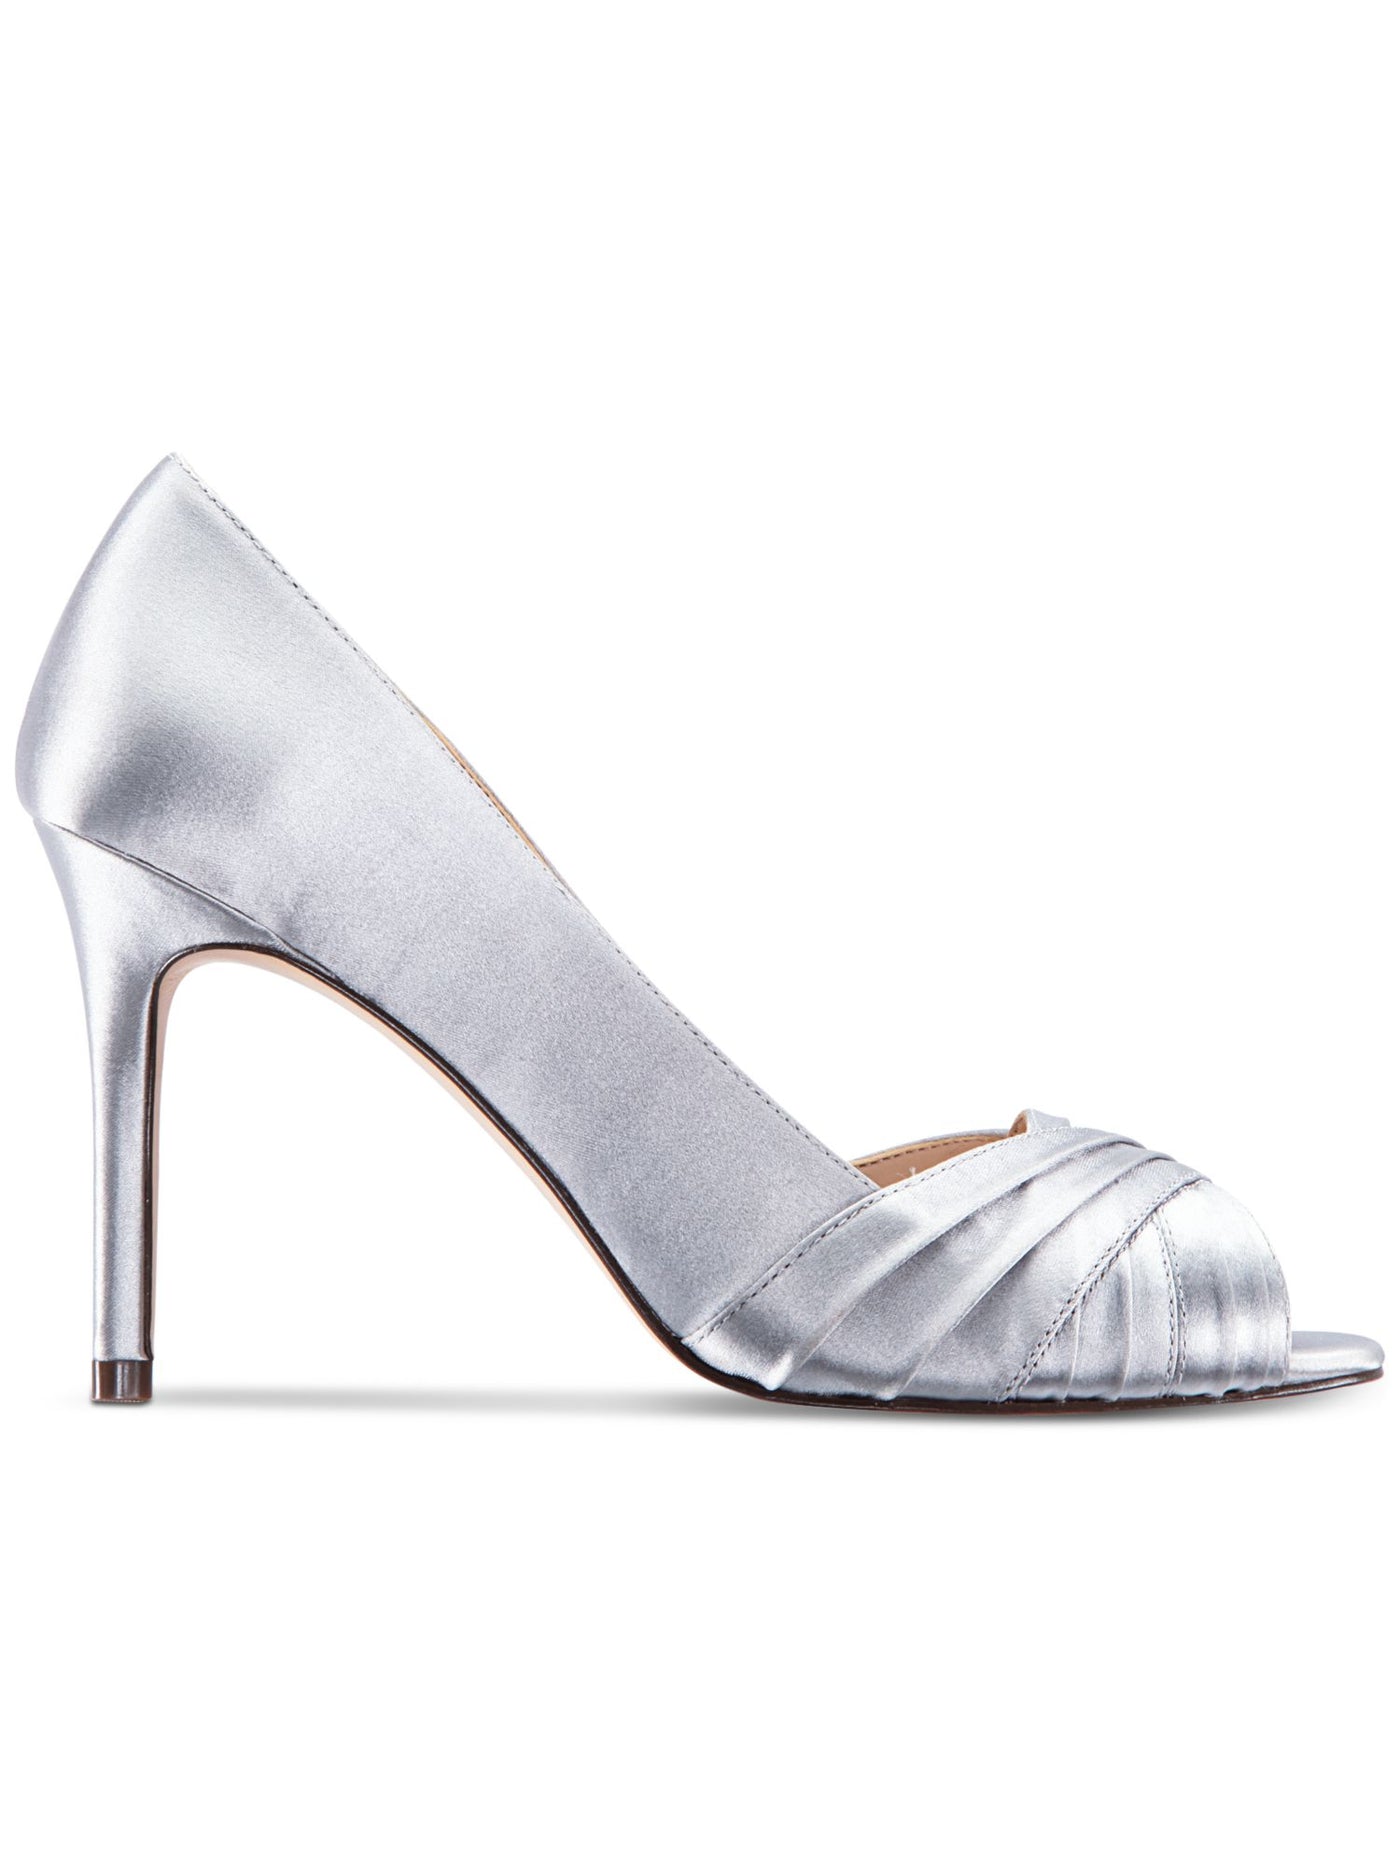 NINA Womens Silver Criss-Cross Pleating Padded Rhiyana Round Toe Stiletto Slip On Pumps Shoes 9 W